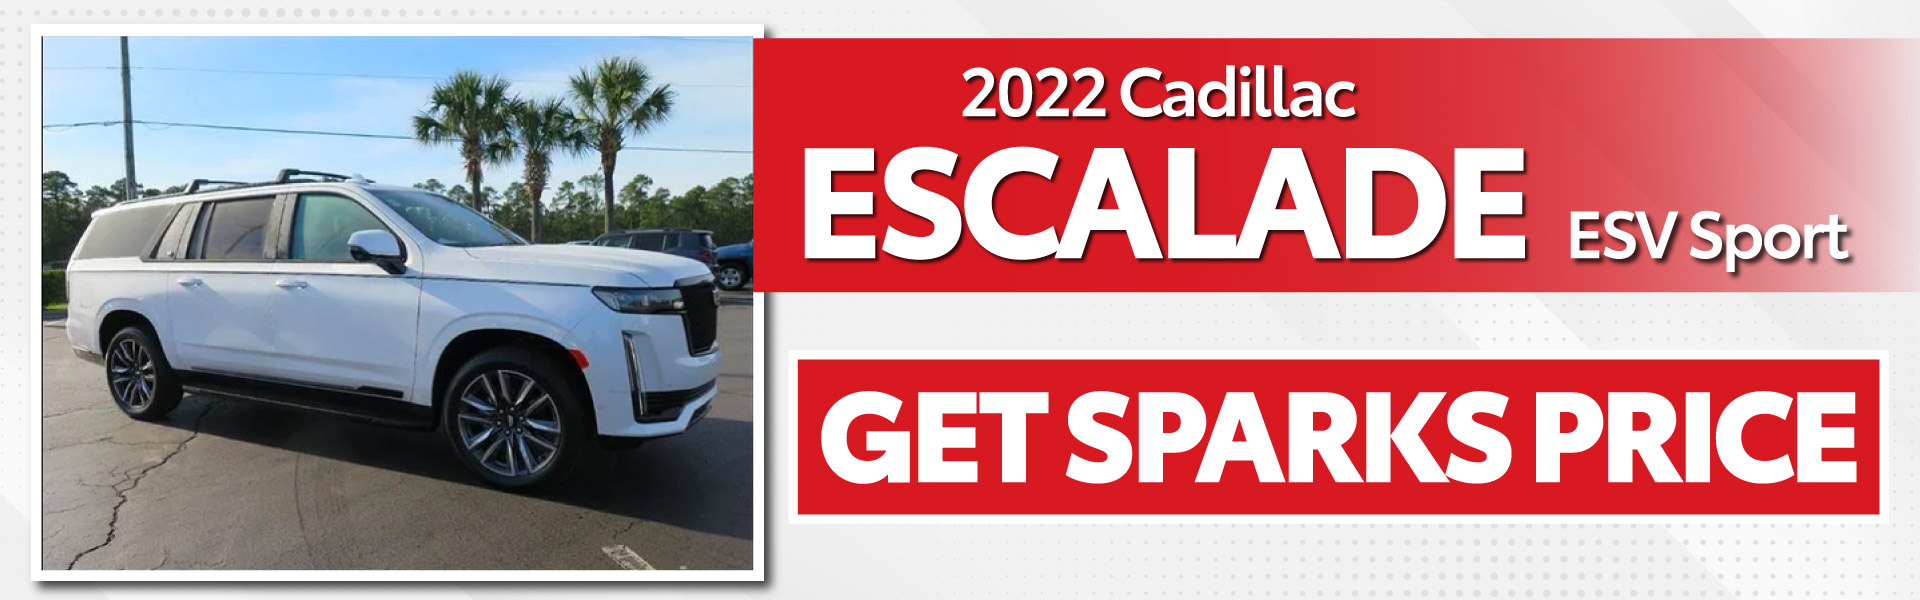 2022 Cadillac Escalade ESV Sport - Get Sparks Price